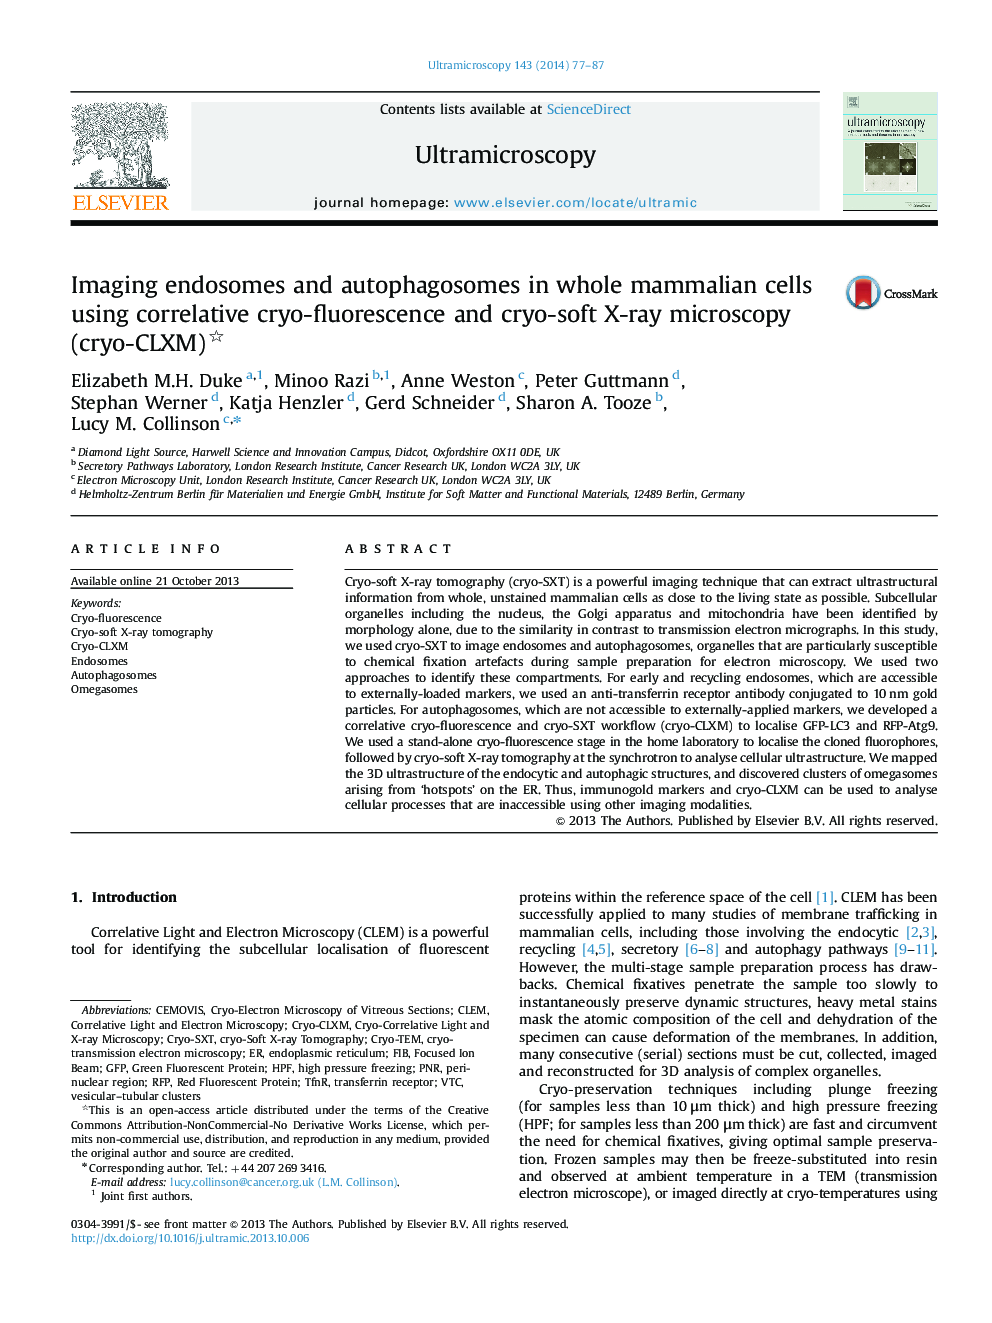 Imaging endosomes and autophagosomes in whole mammalian cells using correlative cryo-fluorescence and cryo-soft X-ray microscopy (cryo-CLXM)